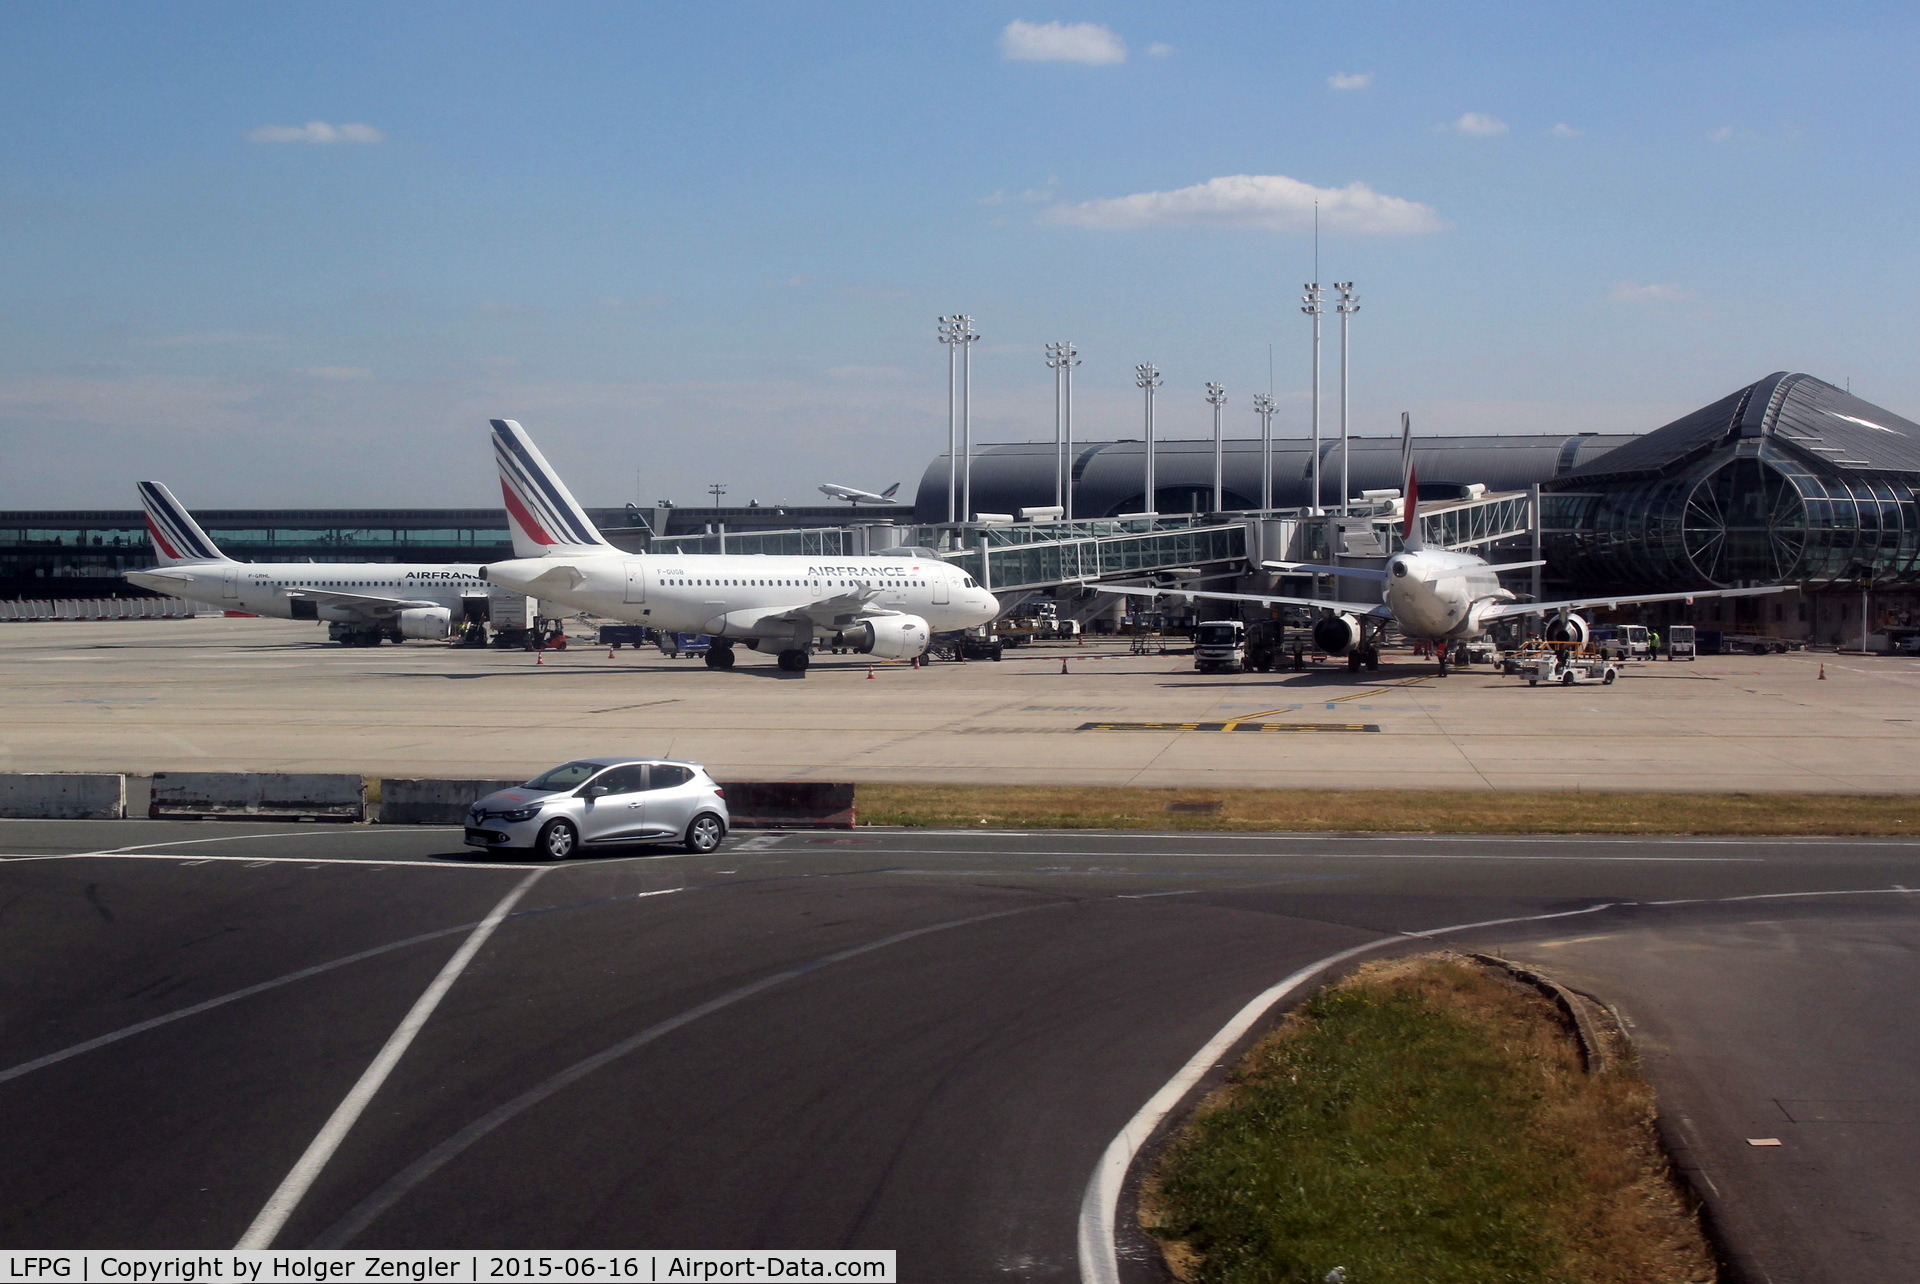 Paris Charles de Gaulle Airport (Roissy Airport), Paris France (LFPG) - View to terminal 2...